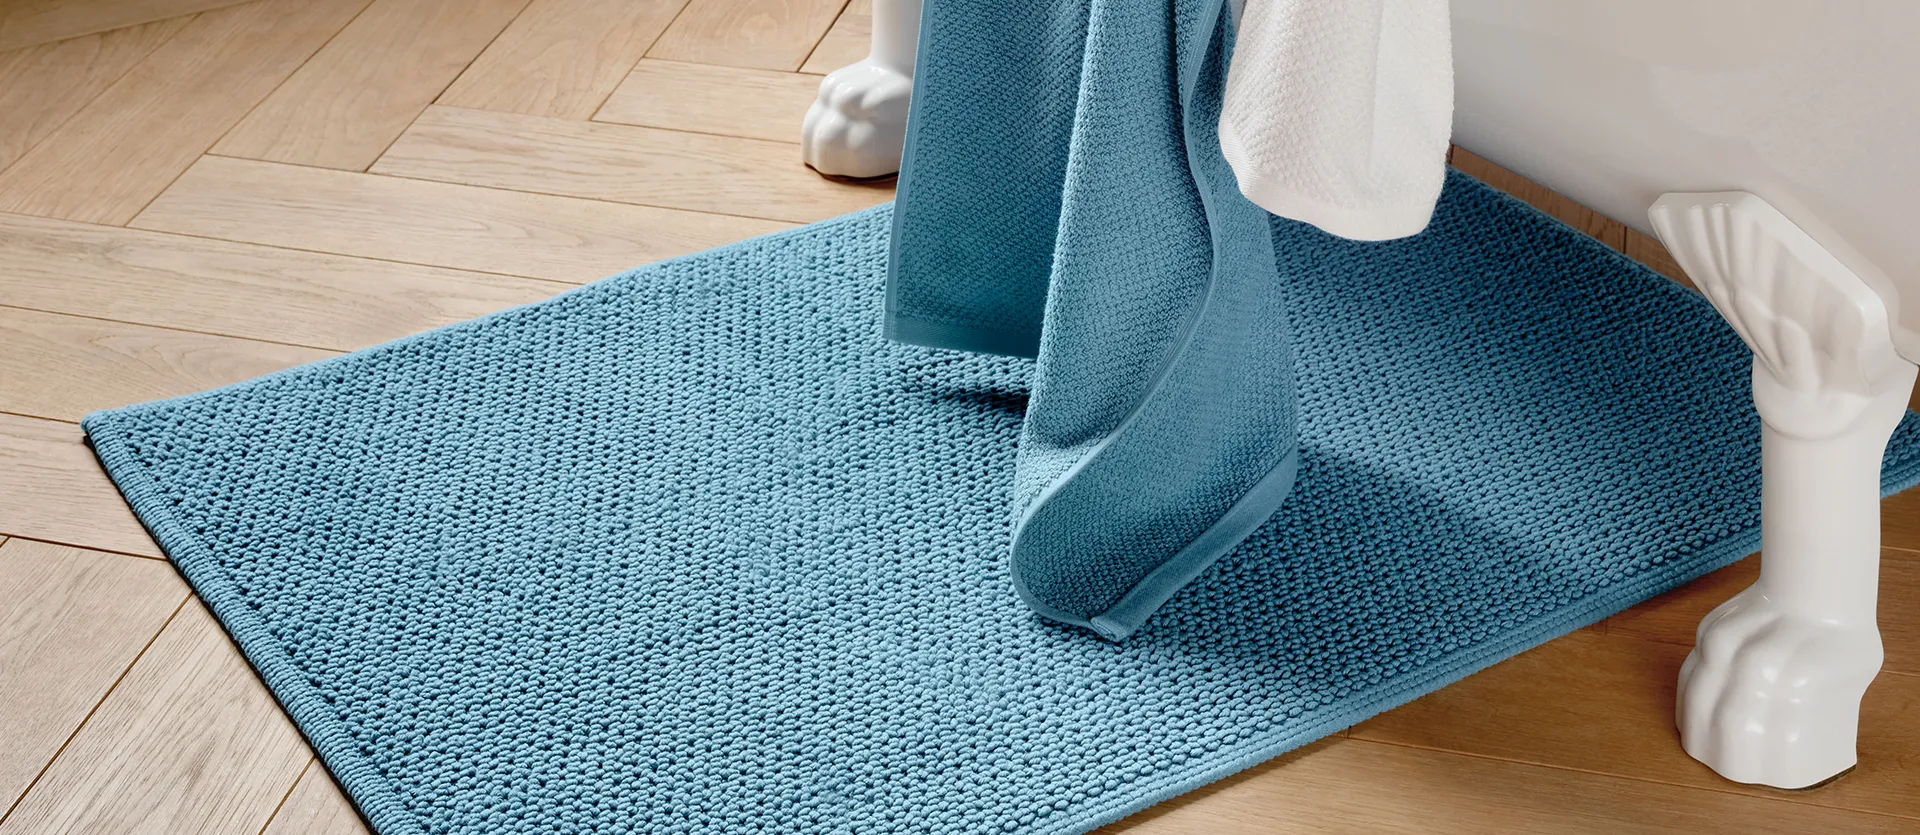 Bath mats - for warm feet in the bathroom